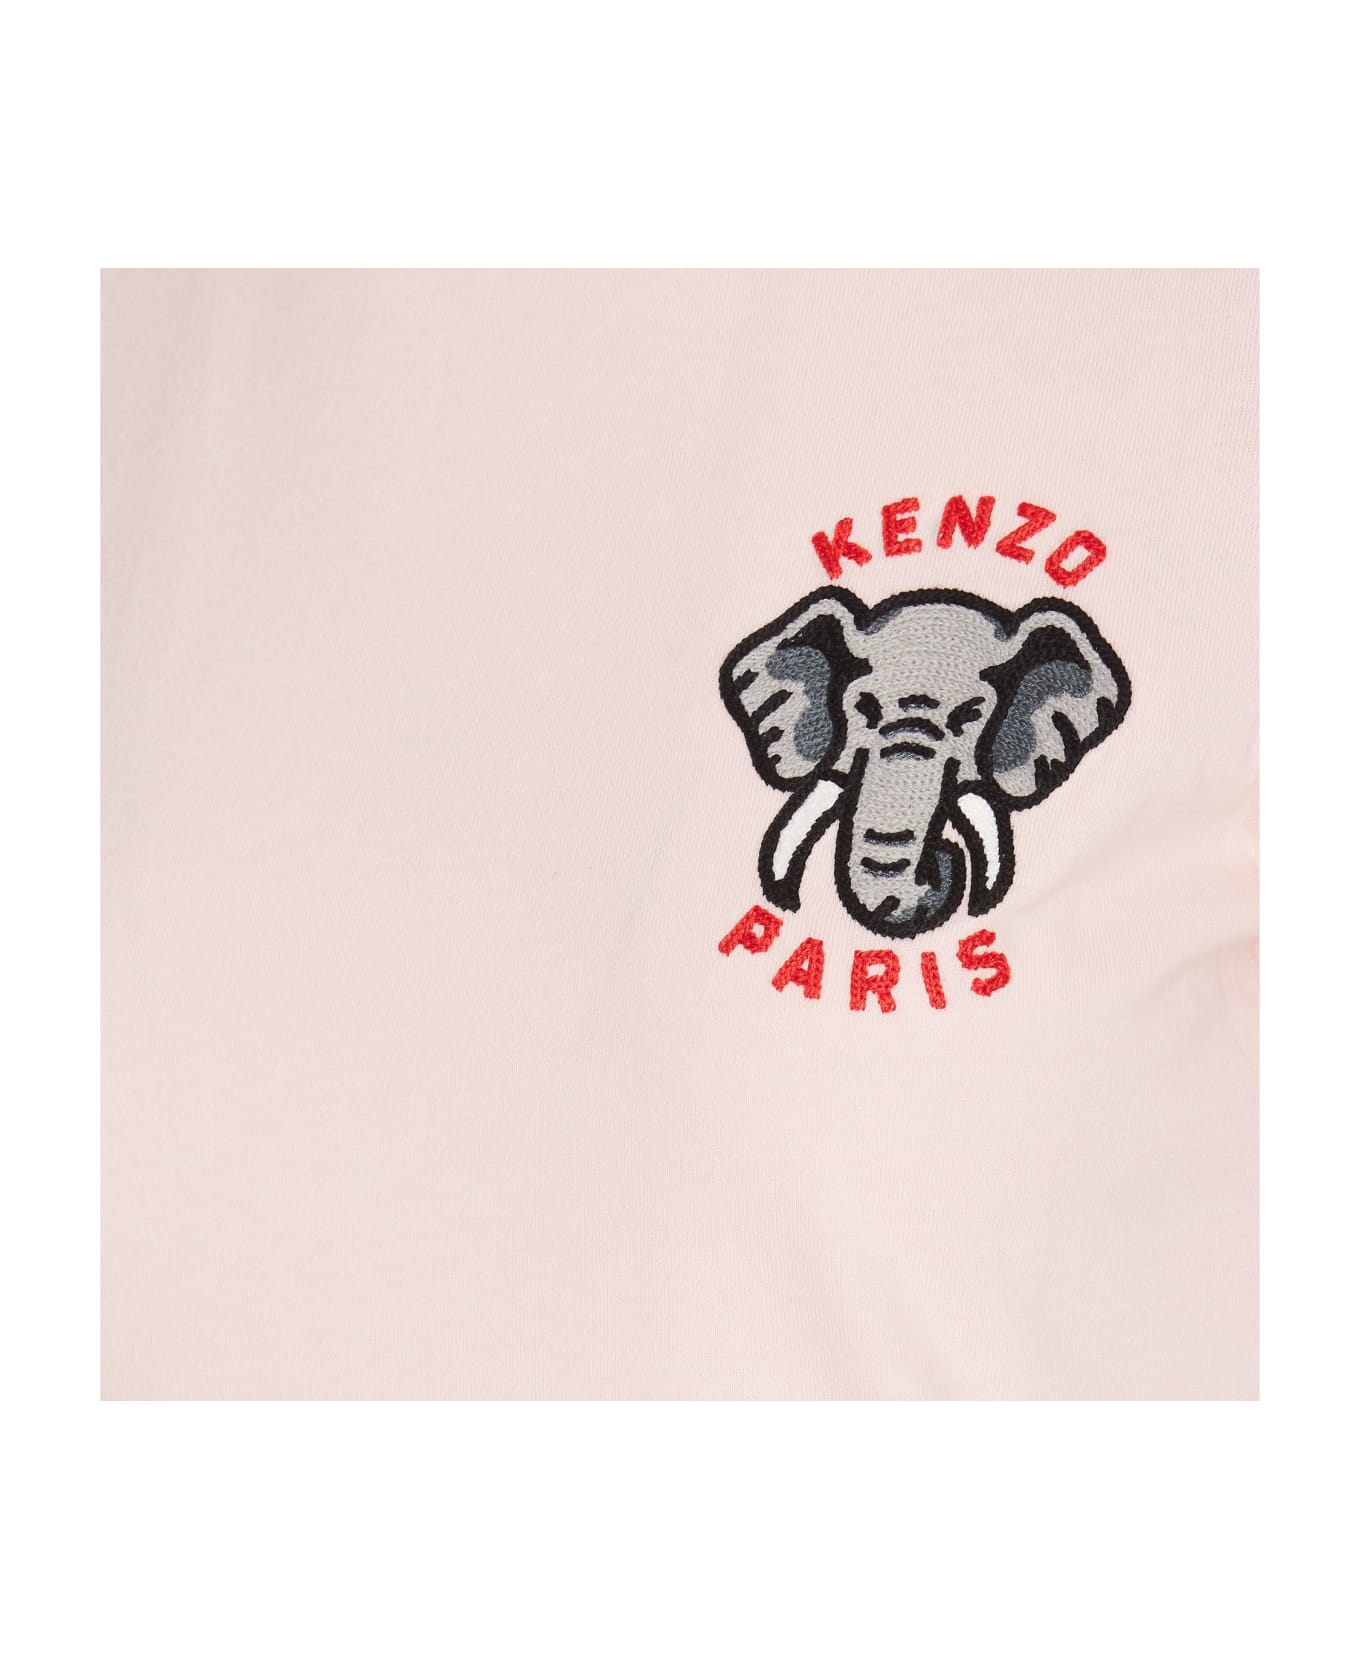 Kenzo Crest Elephant T-shirt - FADED PINK Tシャツ